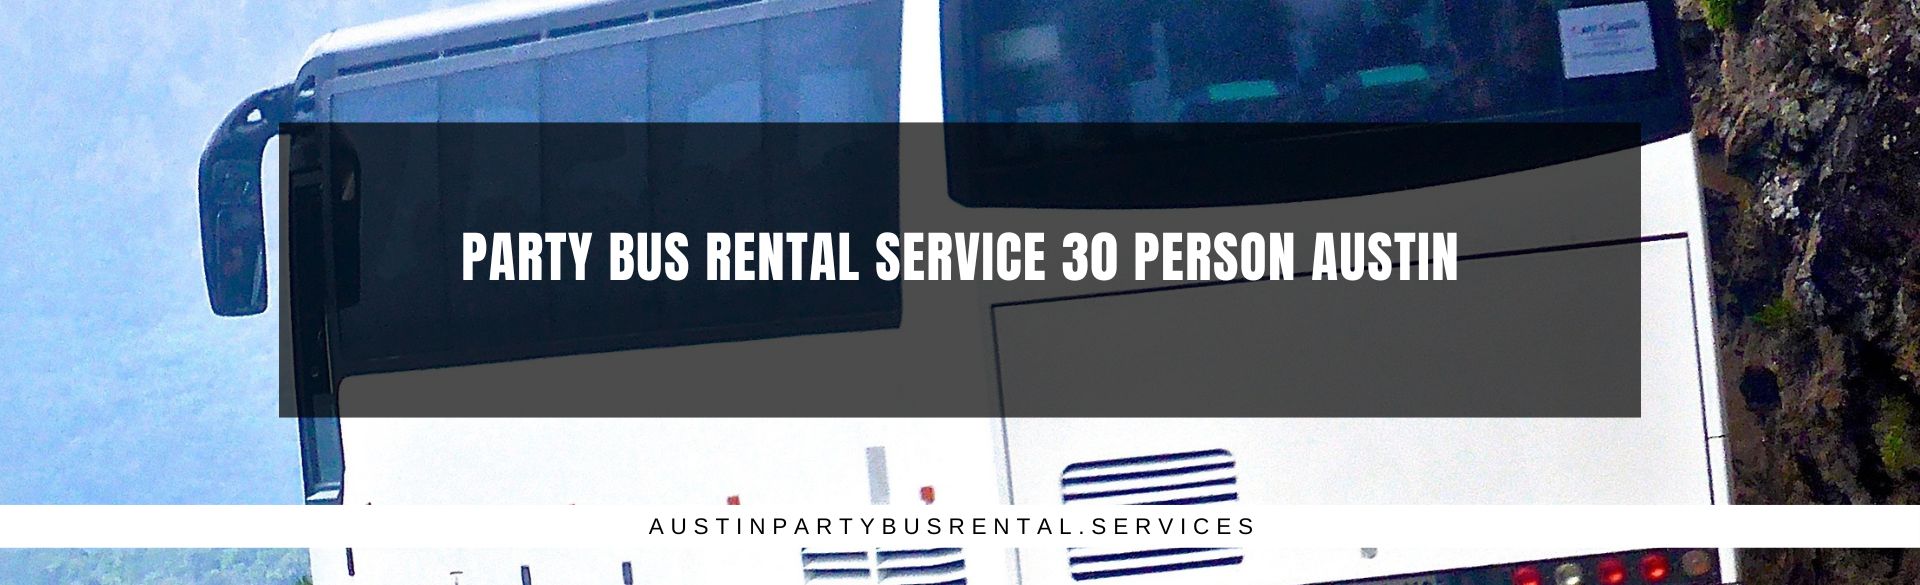 Party Bus Rental Service 30 Person Austin